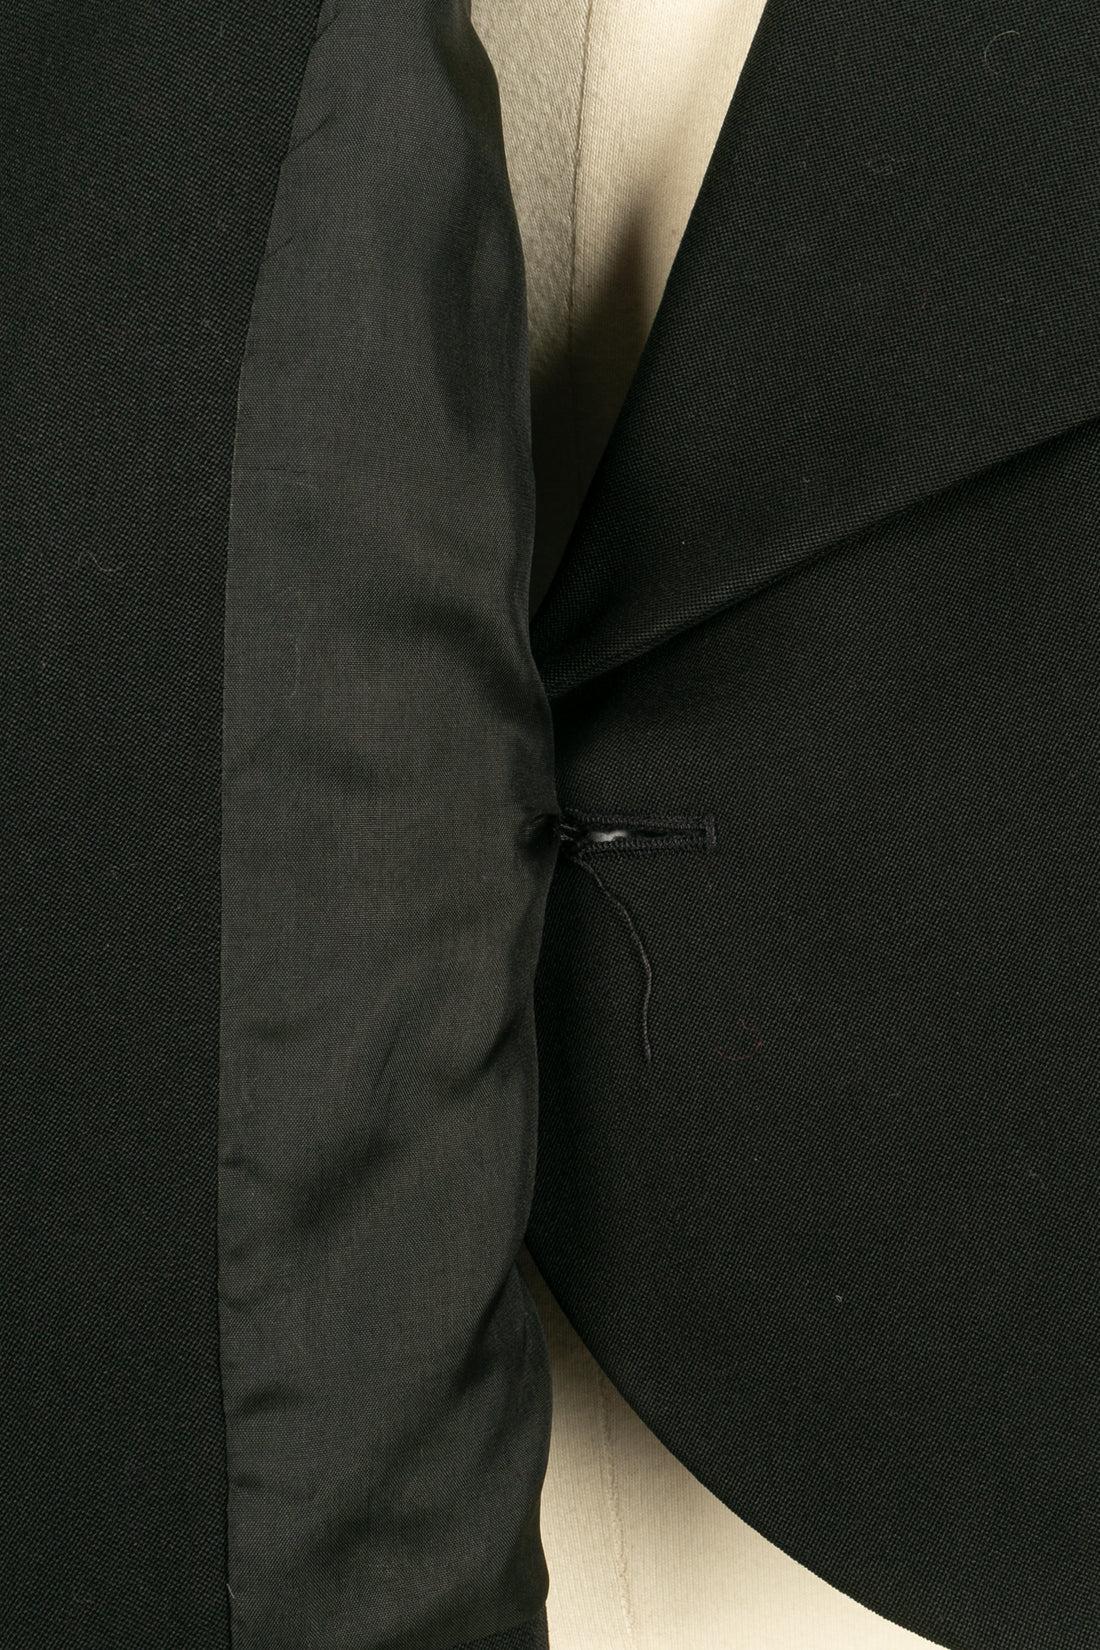 Yves Saint Laurent Black Skirt Suit For Sale 10